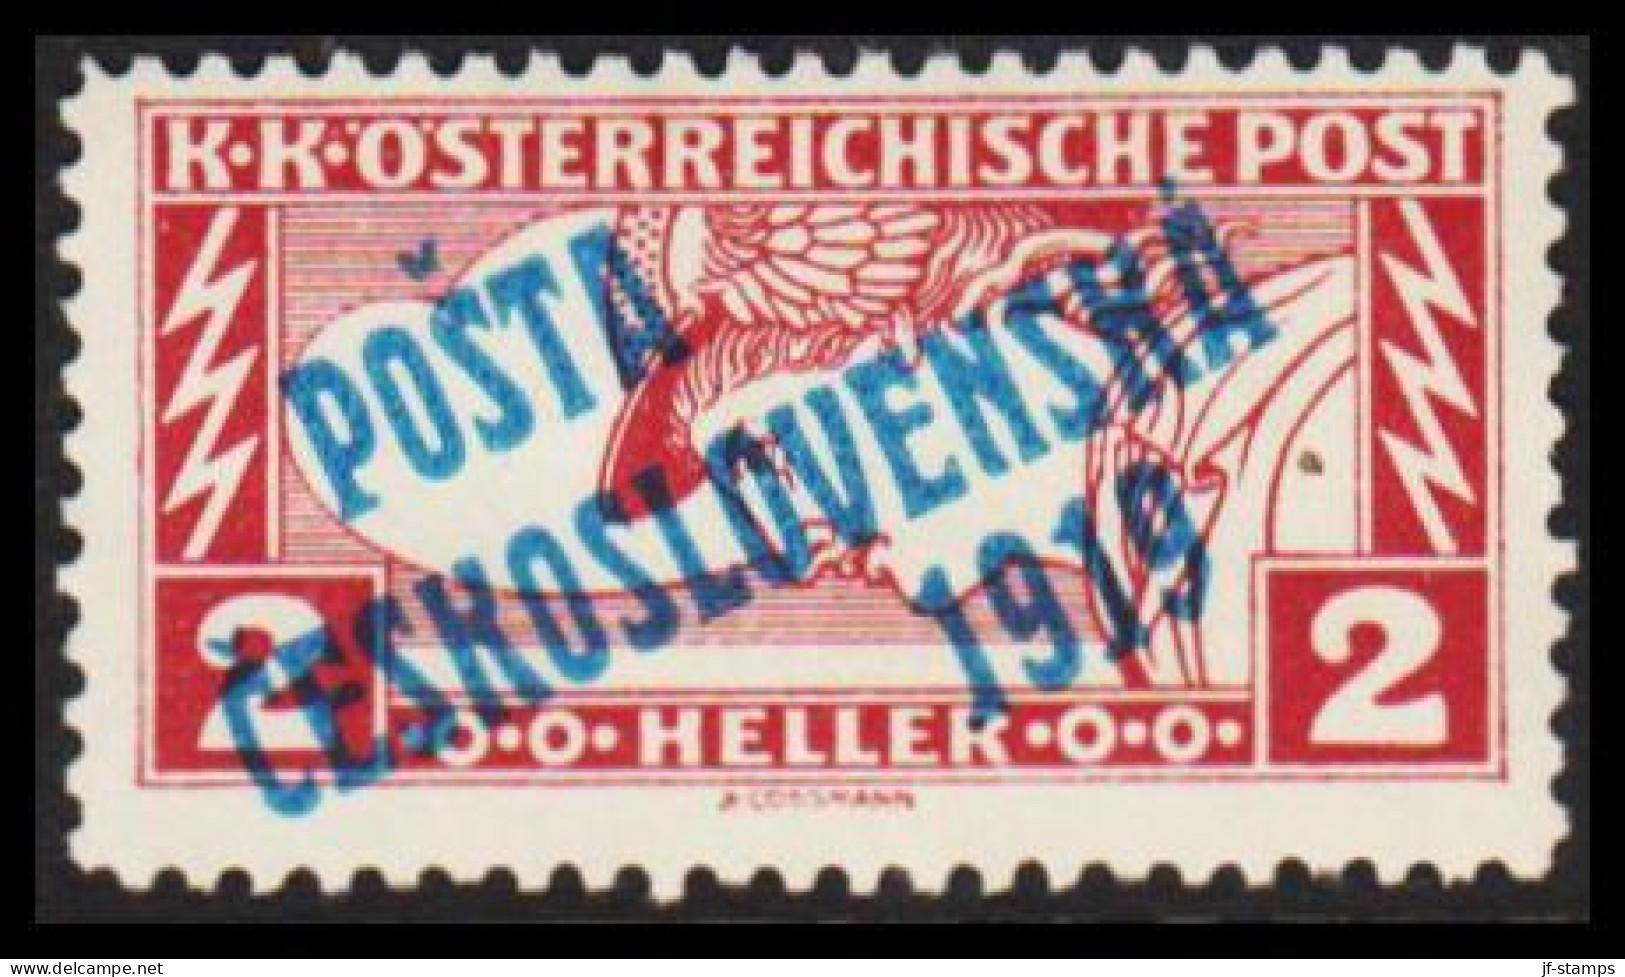 1919. CESKOSLOVENSKO. POSTA CESKOSLOVENSKA 1919 On 2 HELLER Eilmarke ÖSTERREICH. Hinged. - JF544293 - Unused Stamps